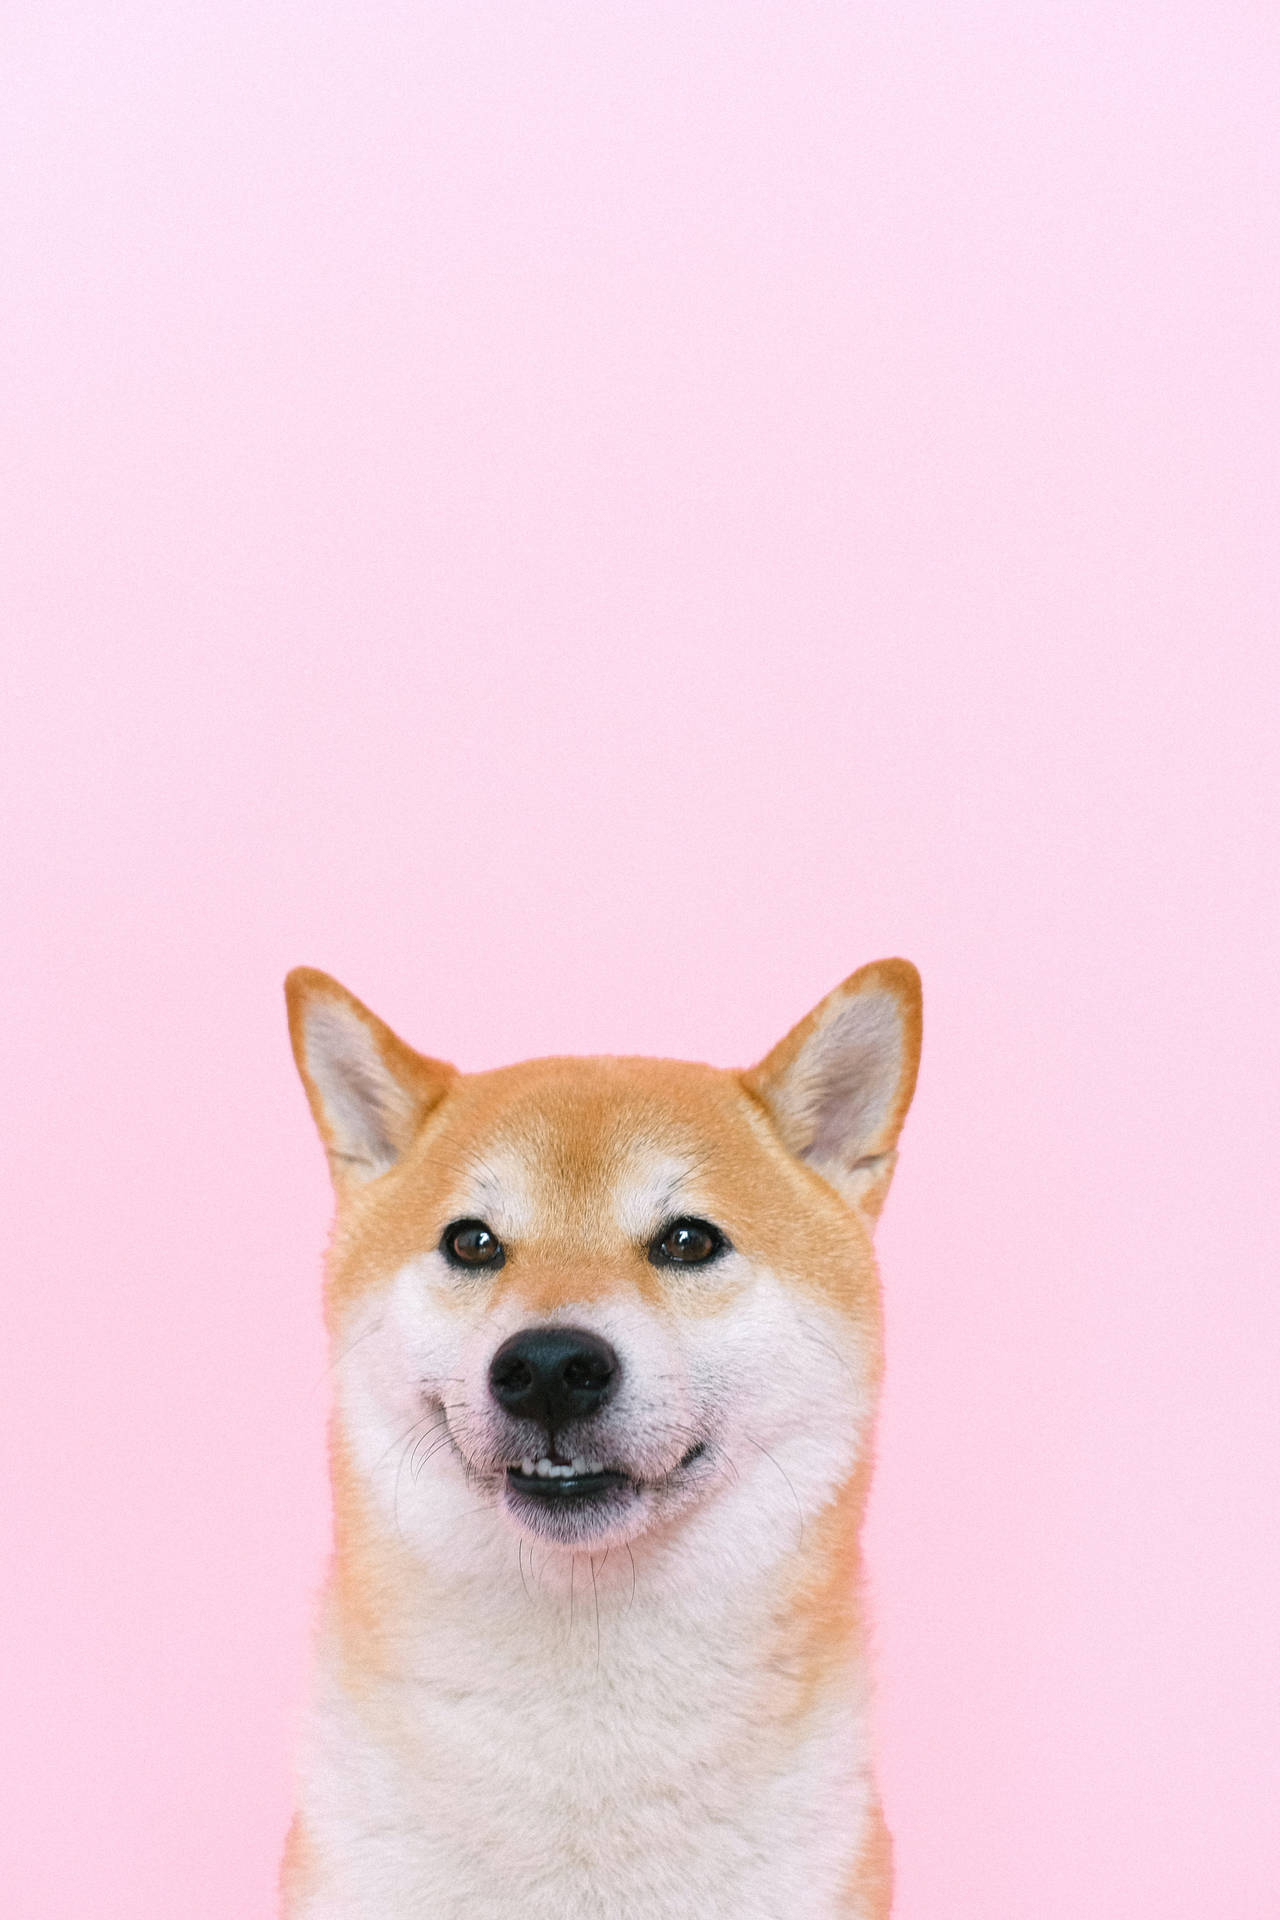 Corgi Dog On Pink Background Wallpaper